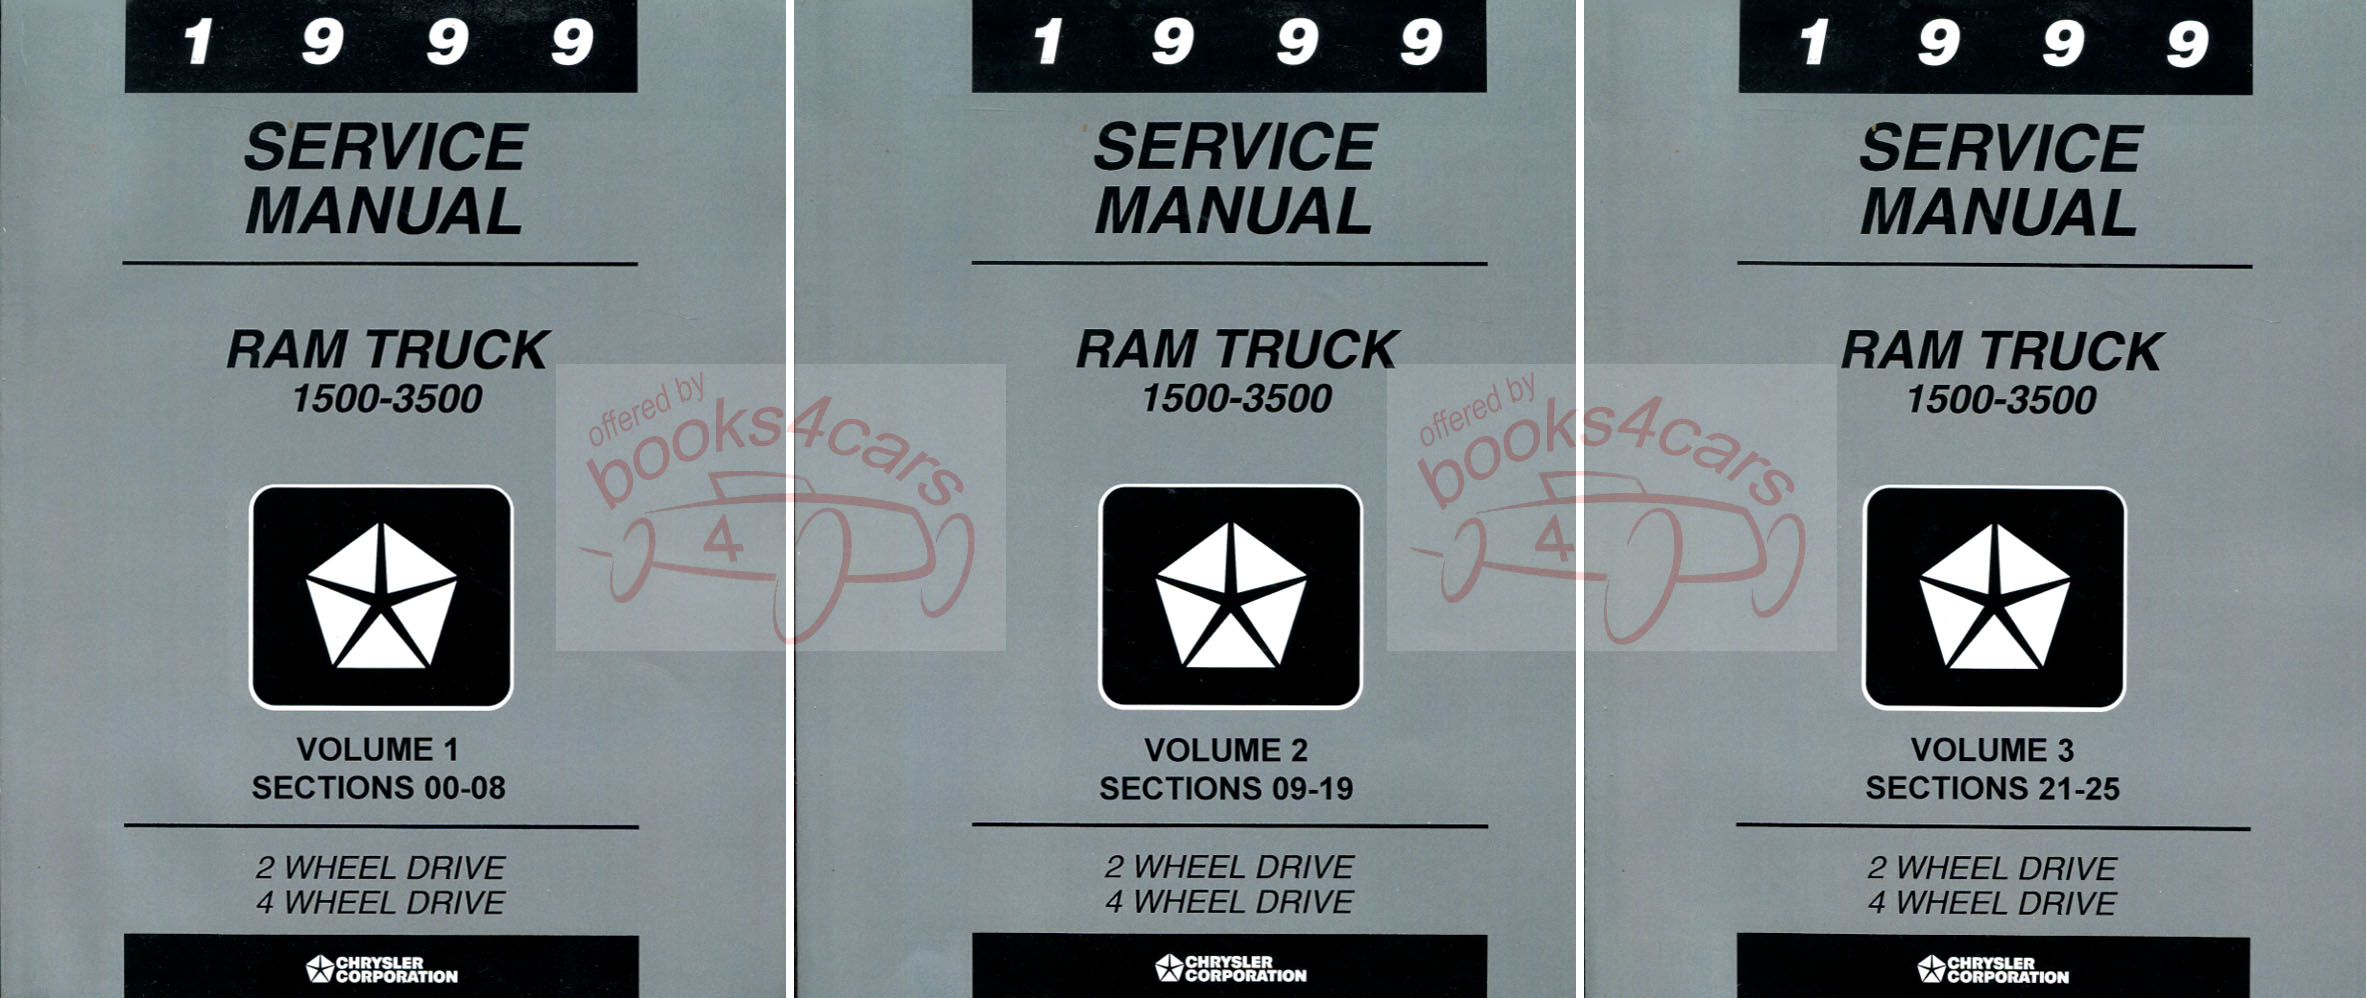 99 Ram Truck Shop Service Repair Manual by Dodge Truck 1500-3500 includes Diesel